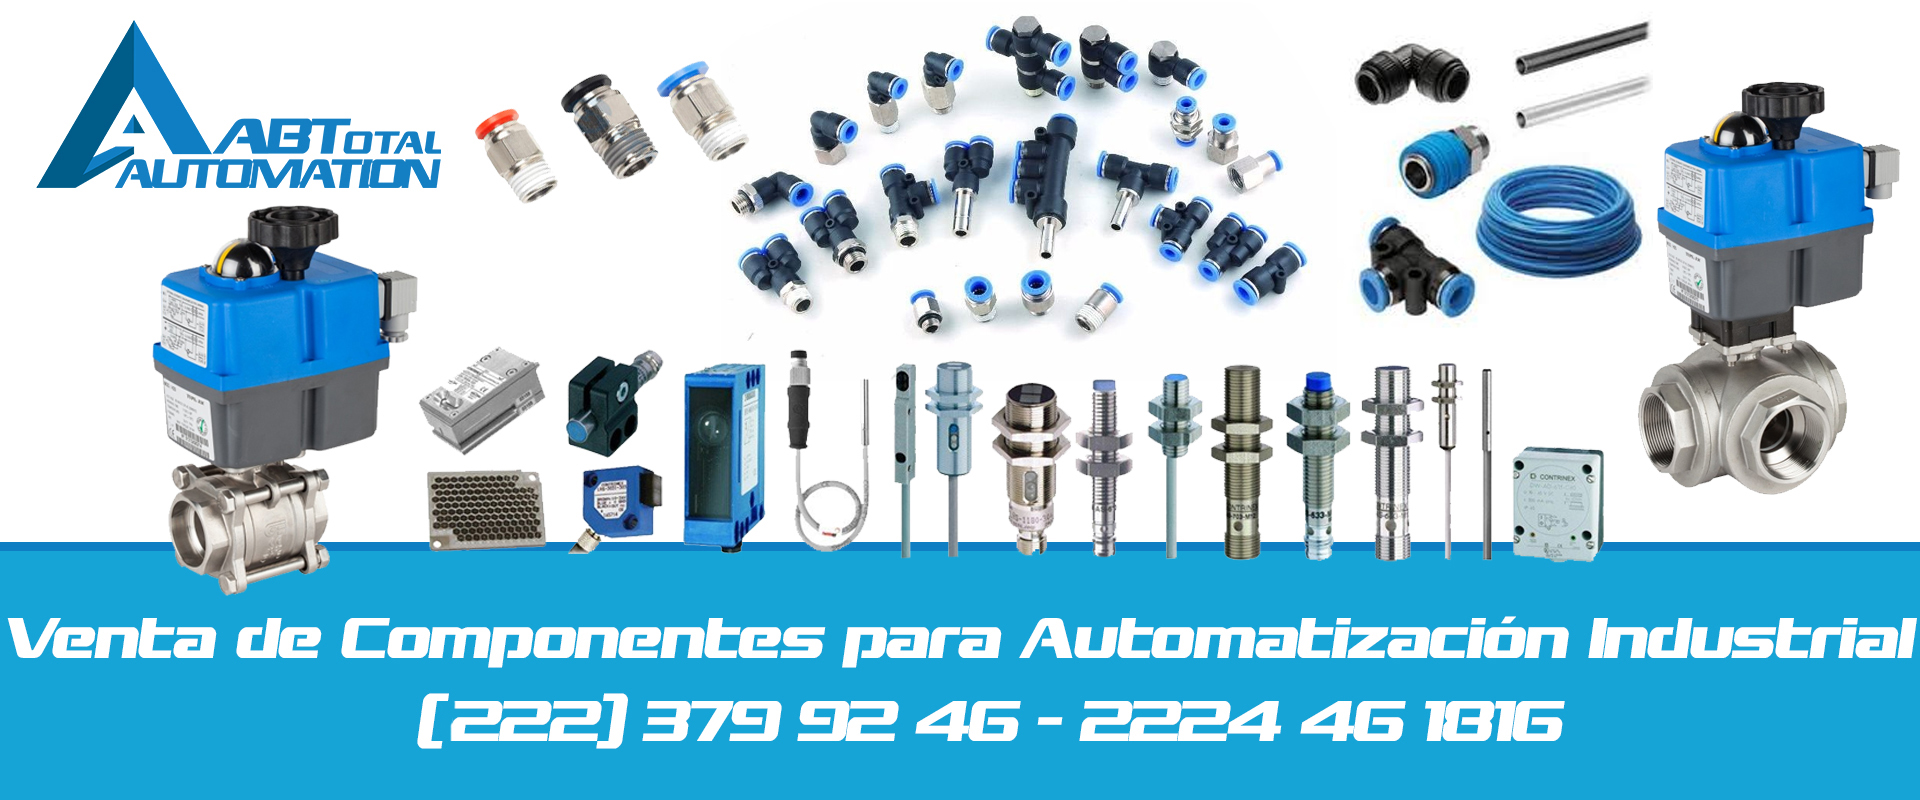 Venta de Componentes para Automatización en Puebla Mexico Tlaxcala